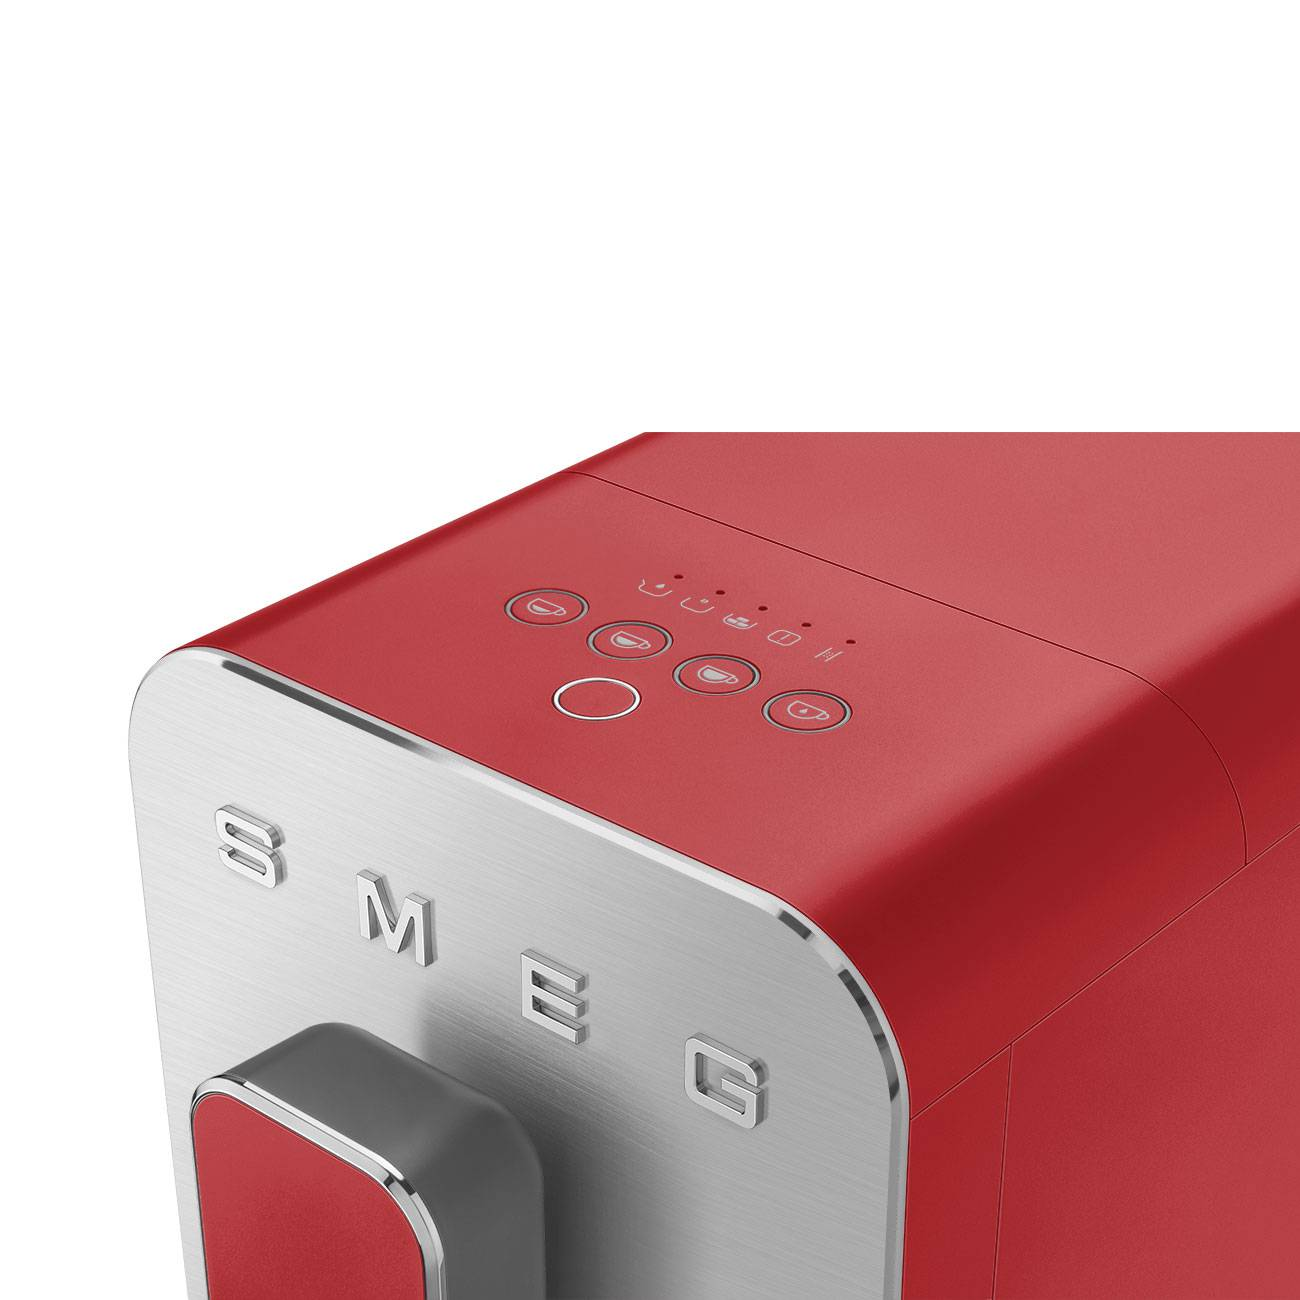 SMEG Smeg BCC01RDMEU bcc01|Bestseller|Kaffee|Kaffeevollautomat|Kleingerät|Meistgesuchte Design Kaffeevollautomat 50\'s Rot Kleingeräte Artikel|Rot